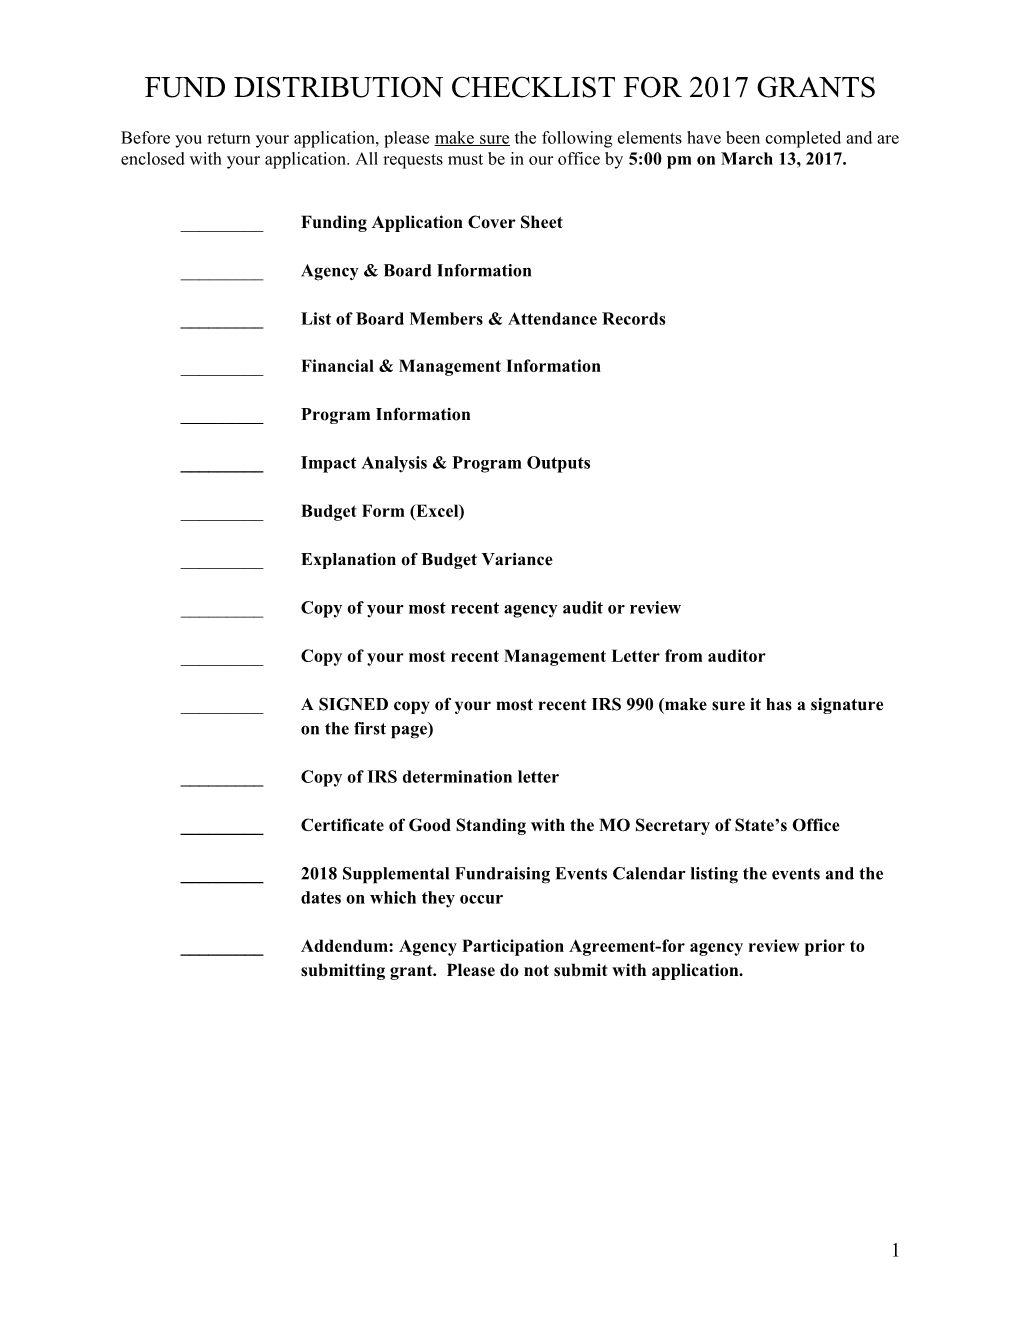 2000 Admissions Application Checklist